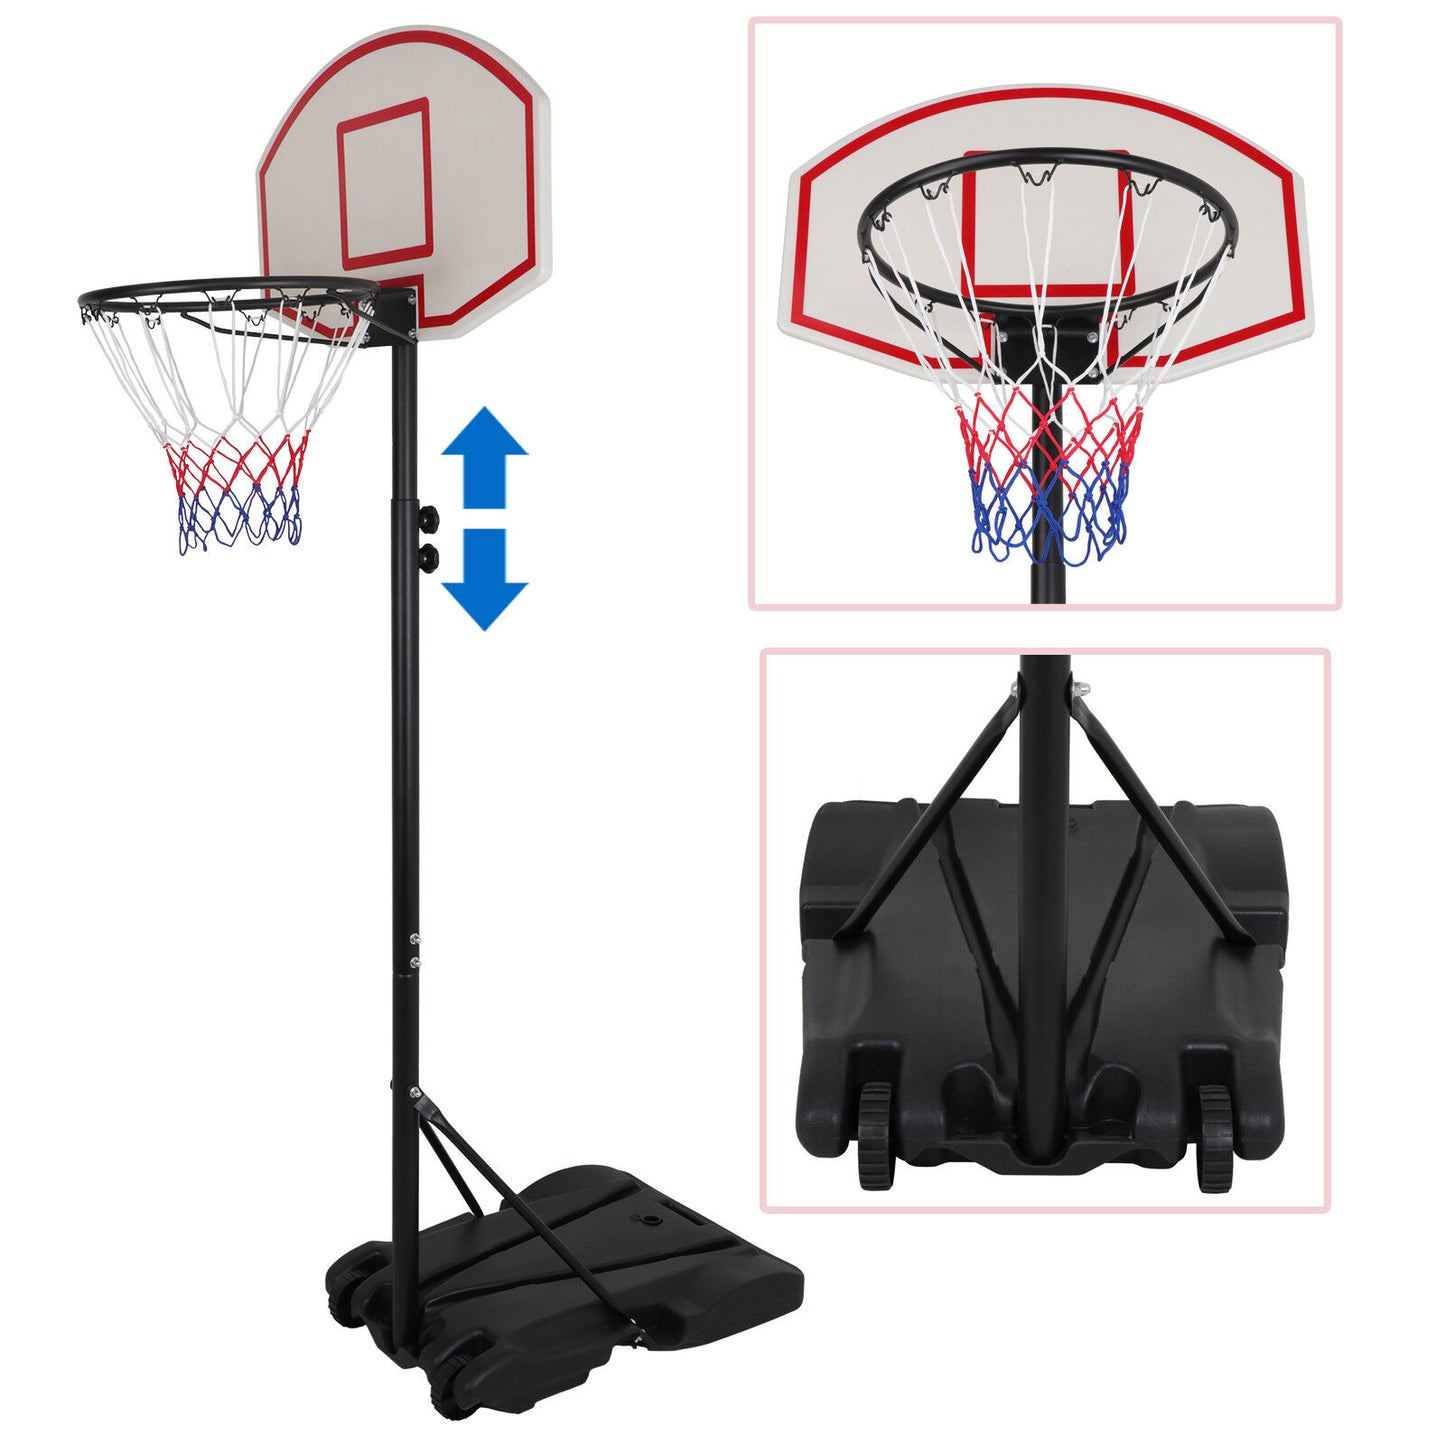 Pro 7ft Basketball Hoop Adjustable Height Portable Backboard System Junior Kid